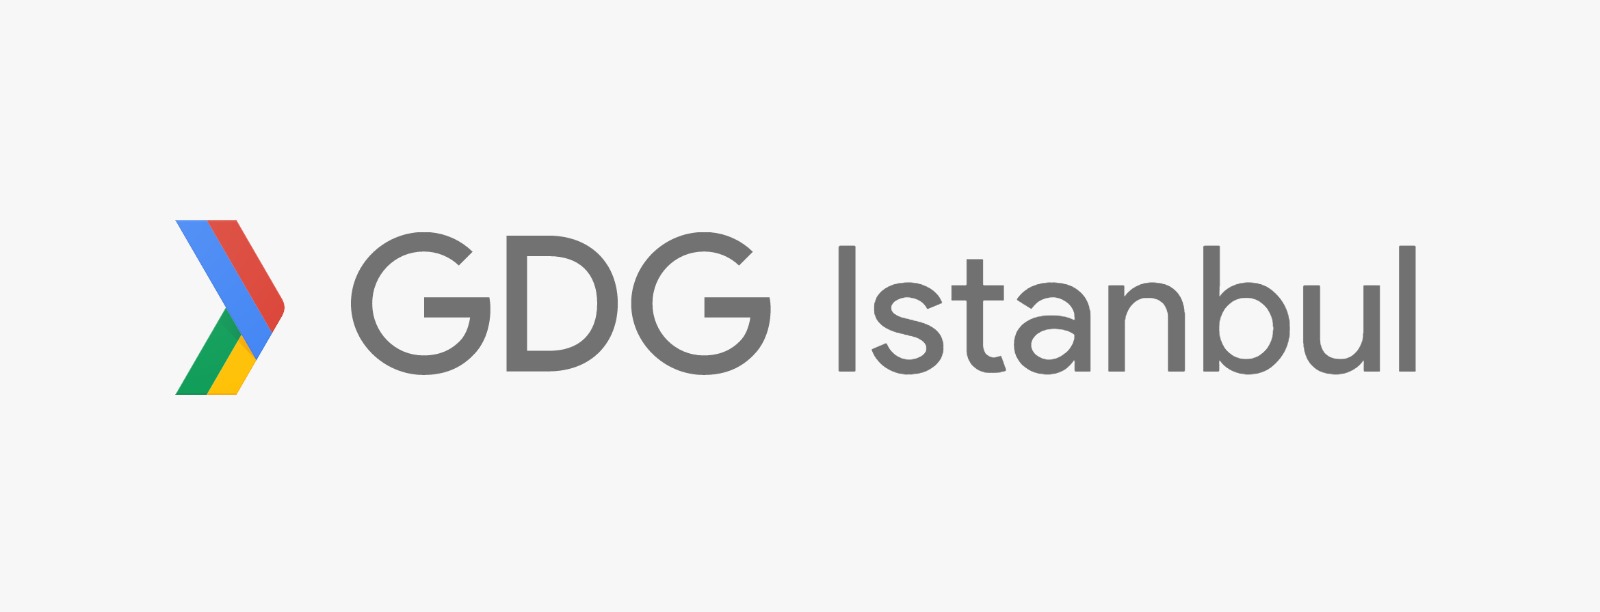 GDG Istanbul